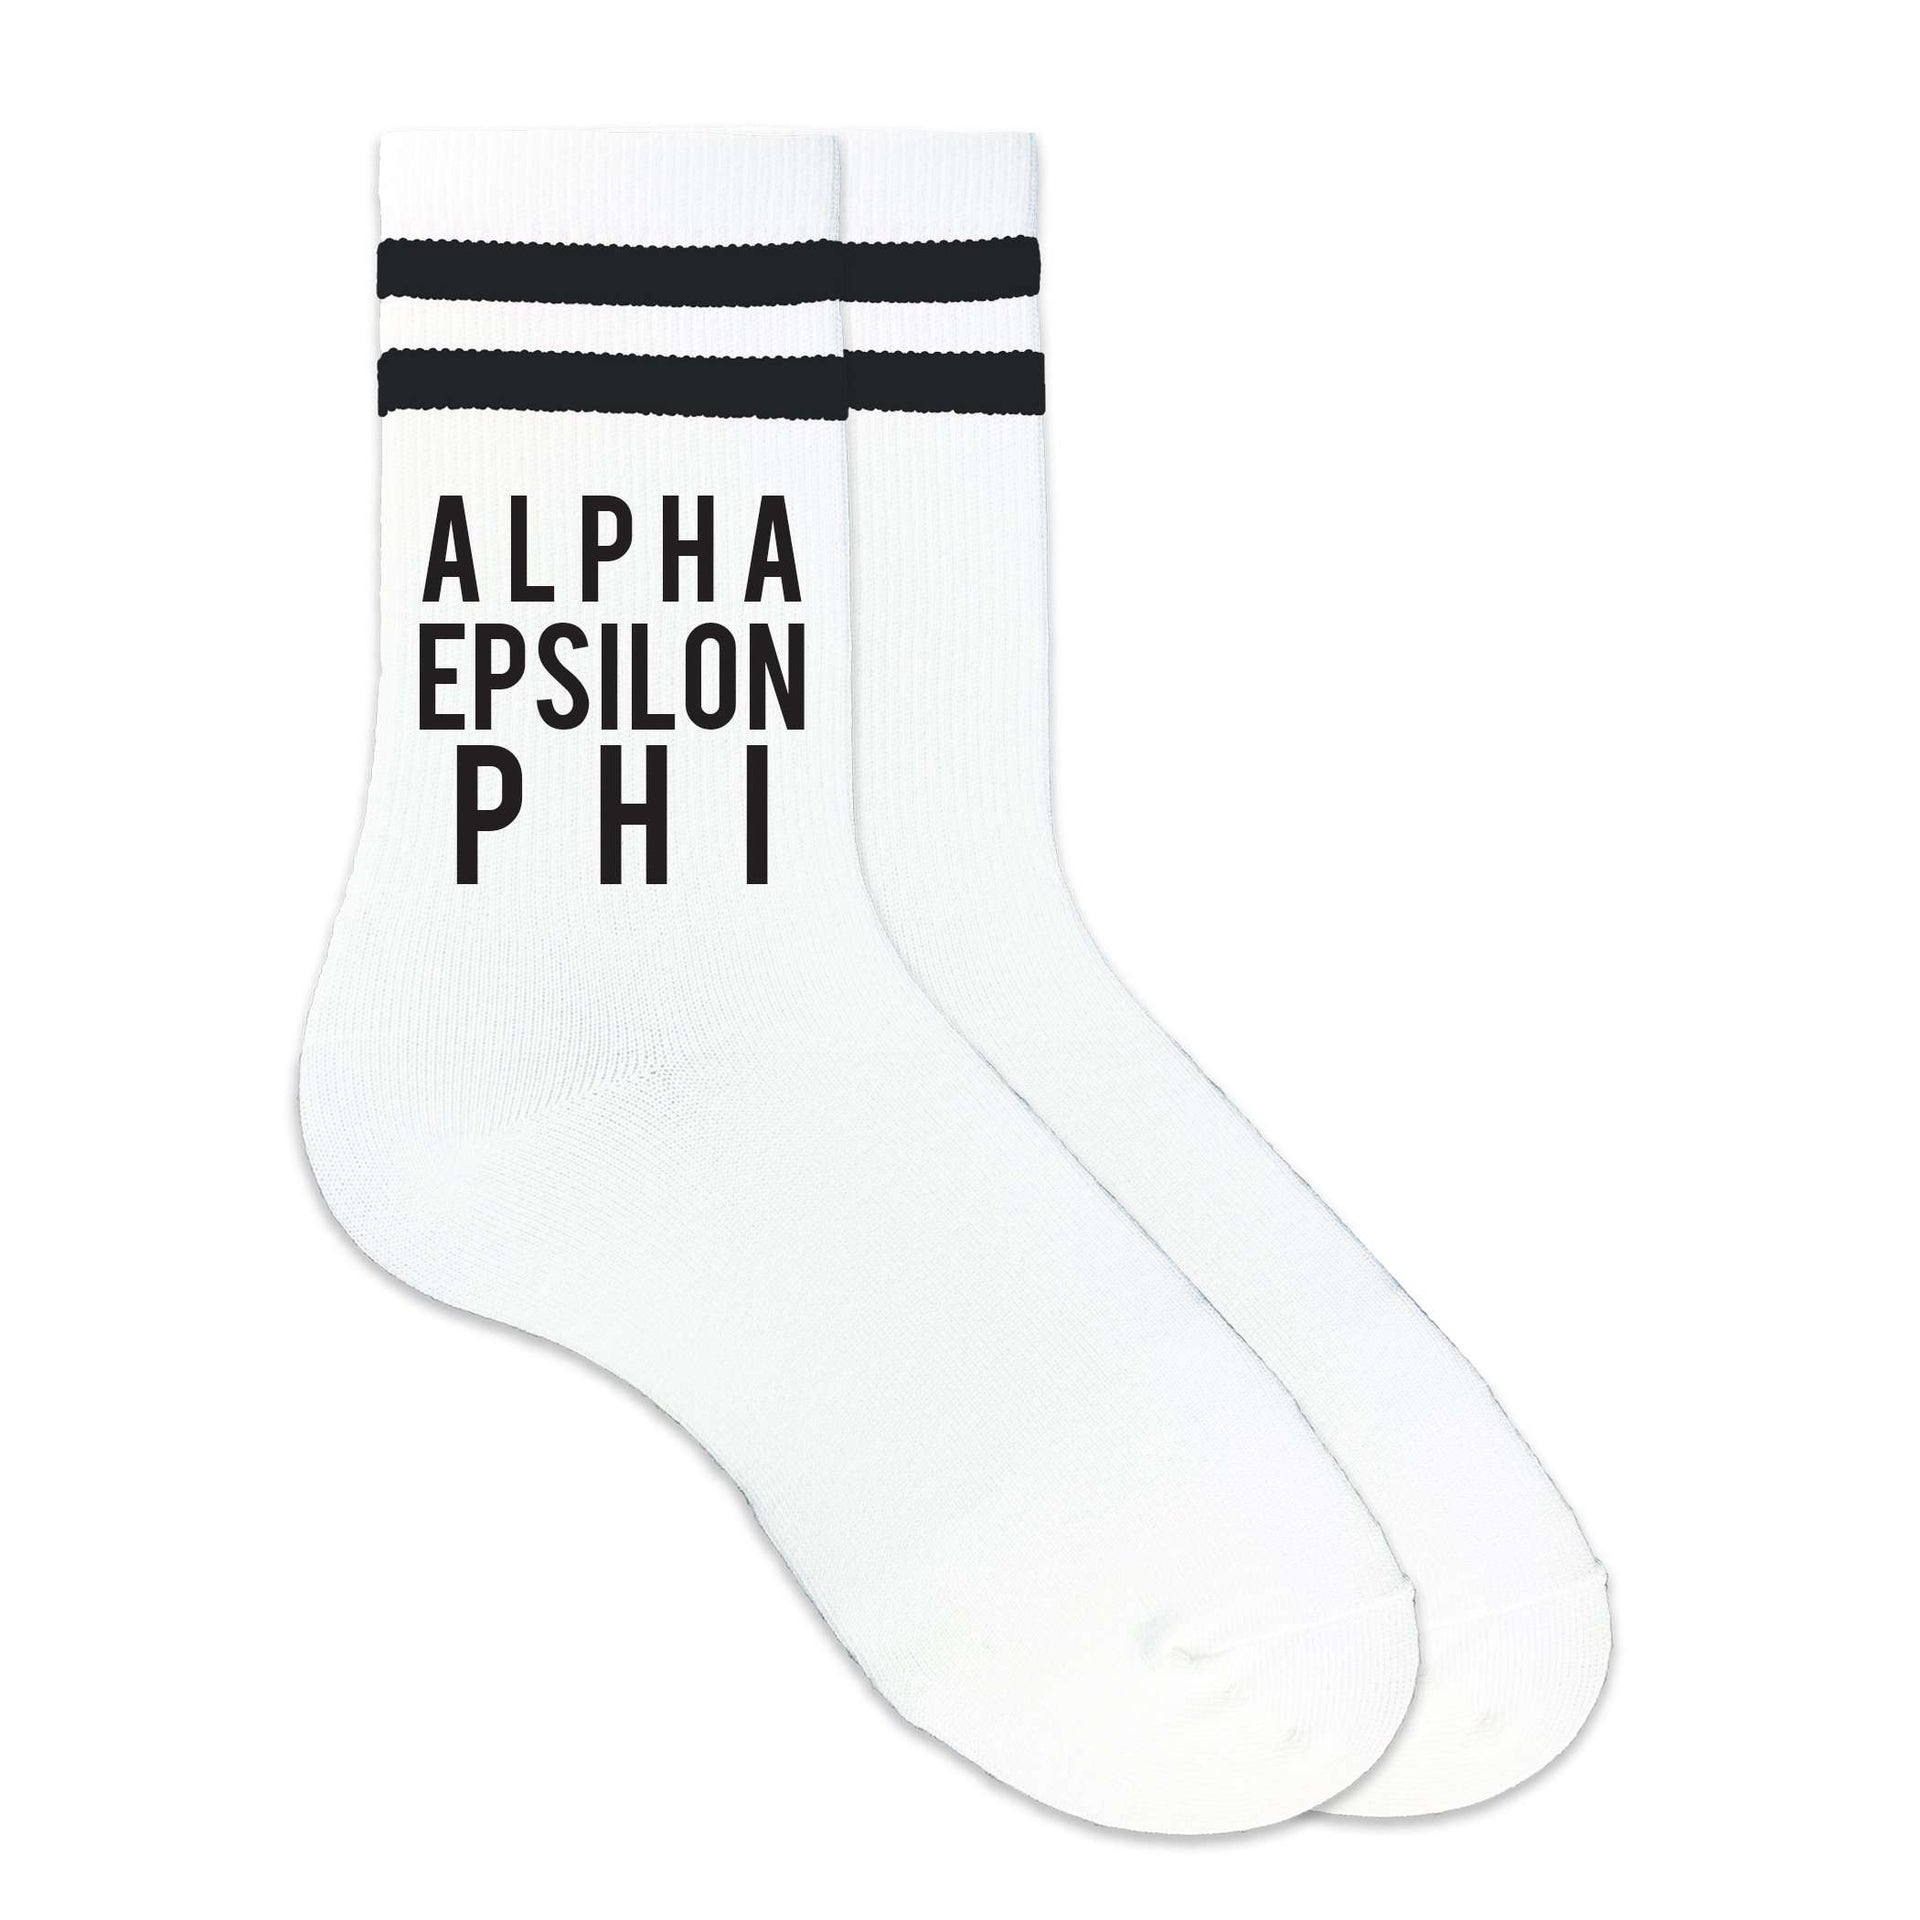 Alpha Epsilon Phi sorority name custom printed on black striped crew socks